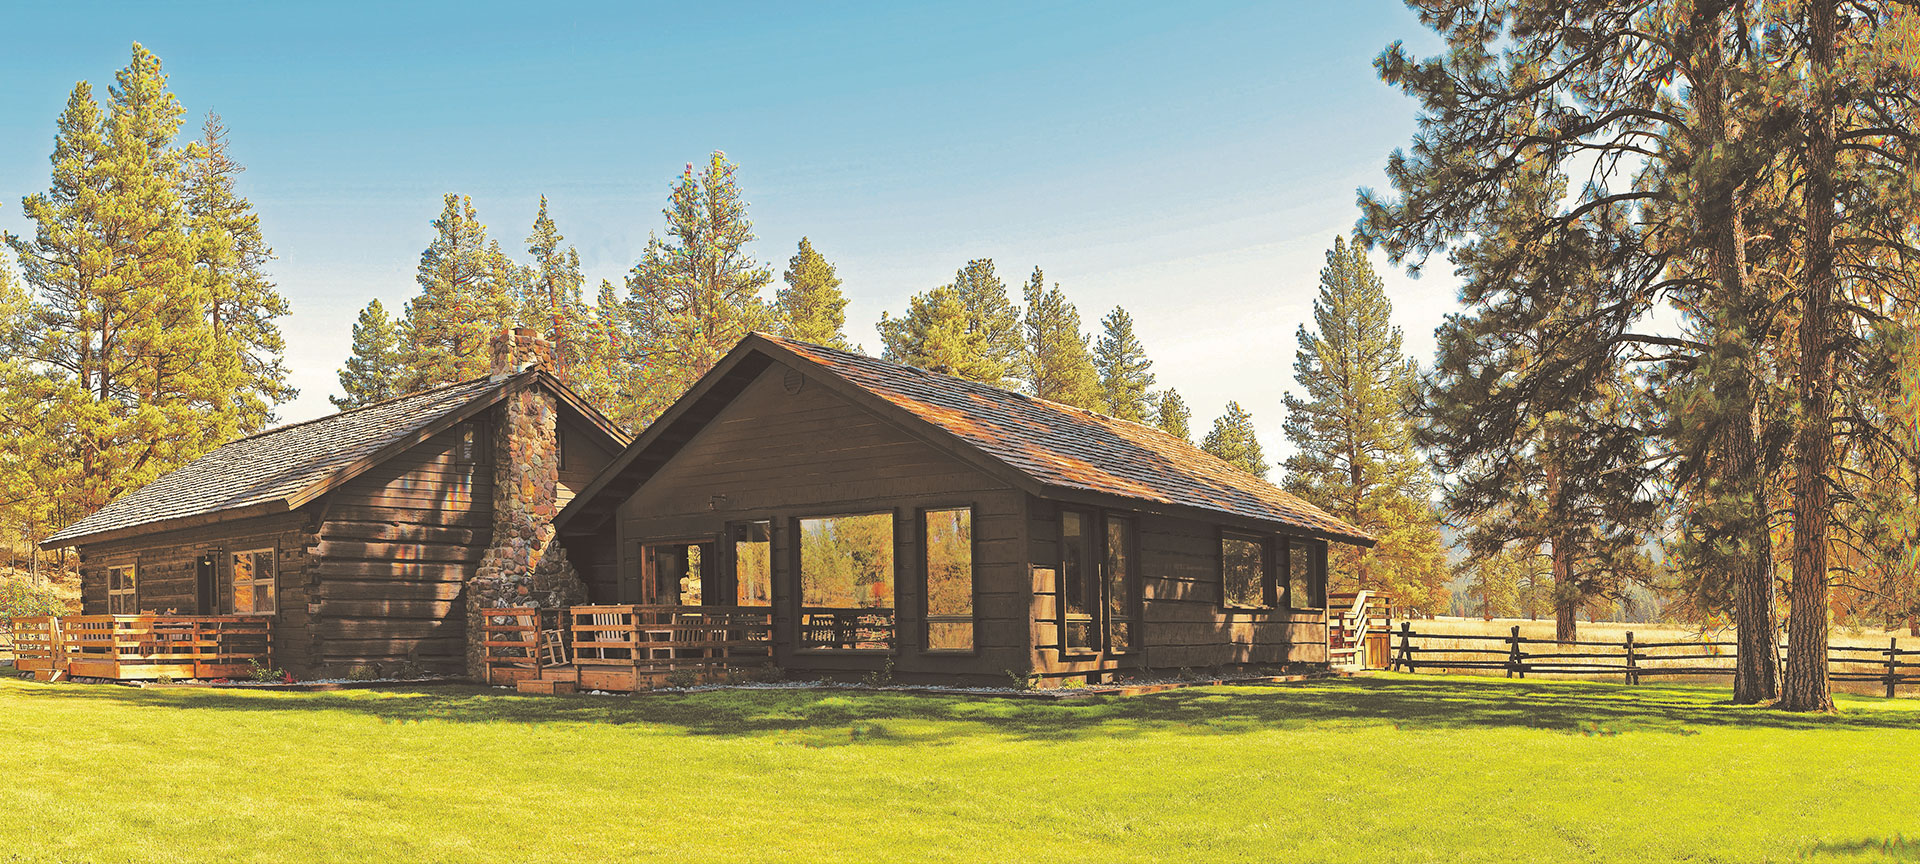 The Blackfoot River Lodge